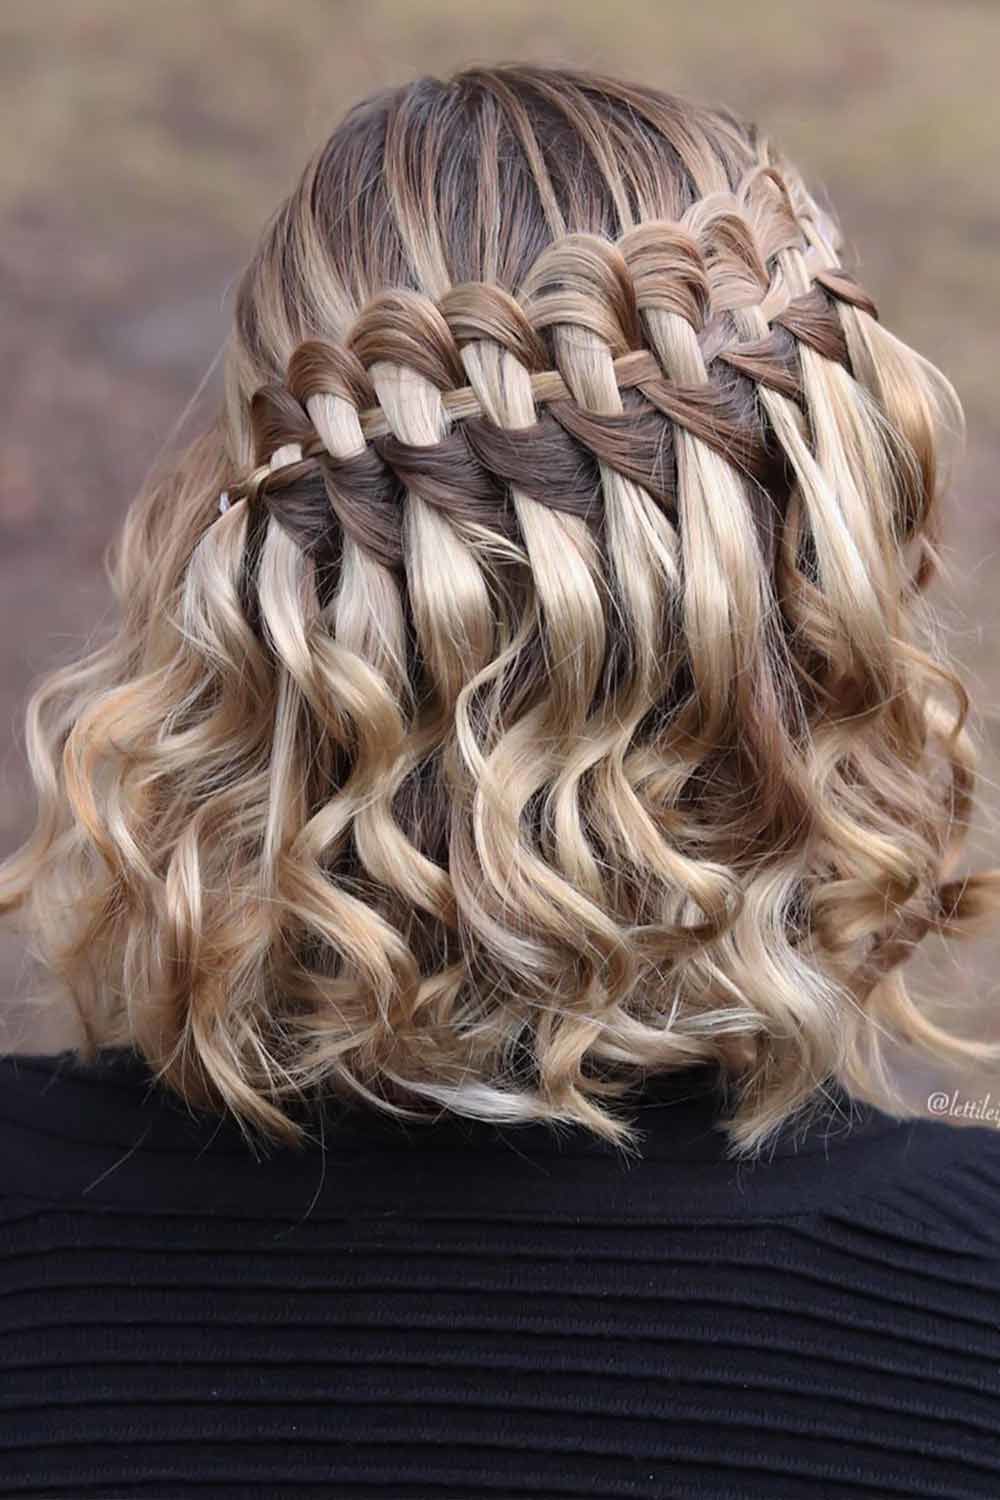 Waterfall Braided Hairstyles For Short Hair Wavy #braids #shorthair